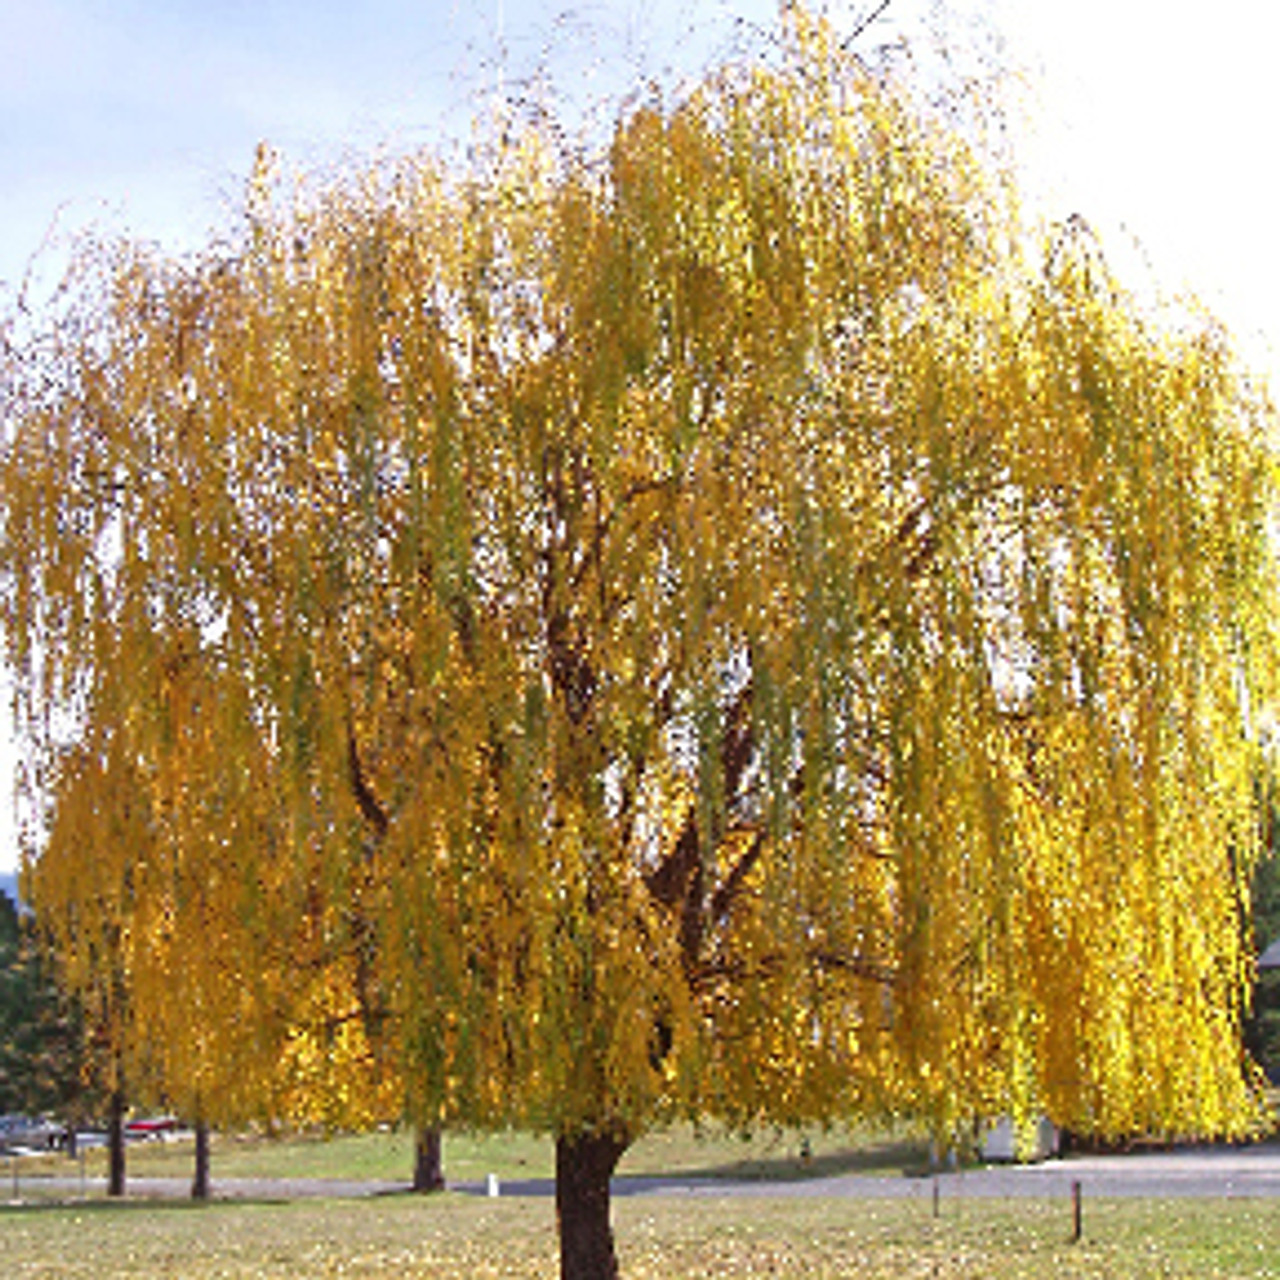 willow tree in fall